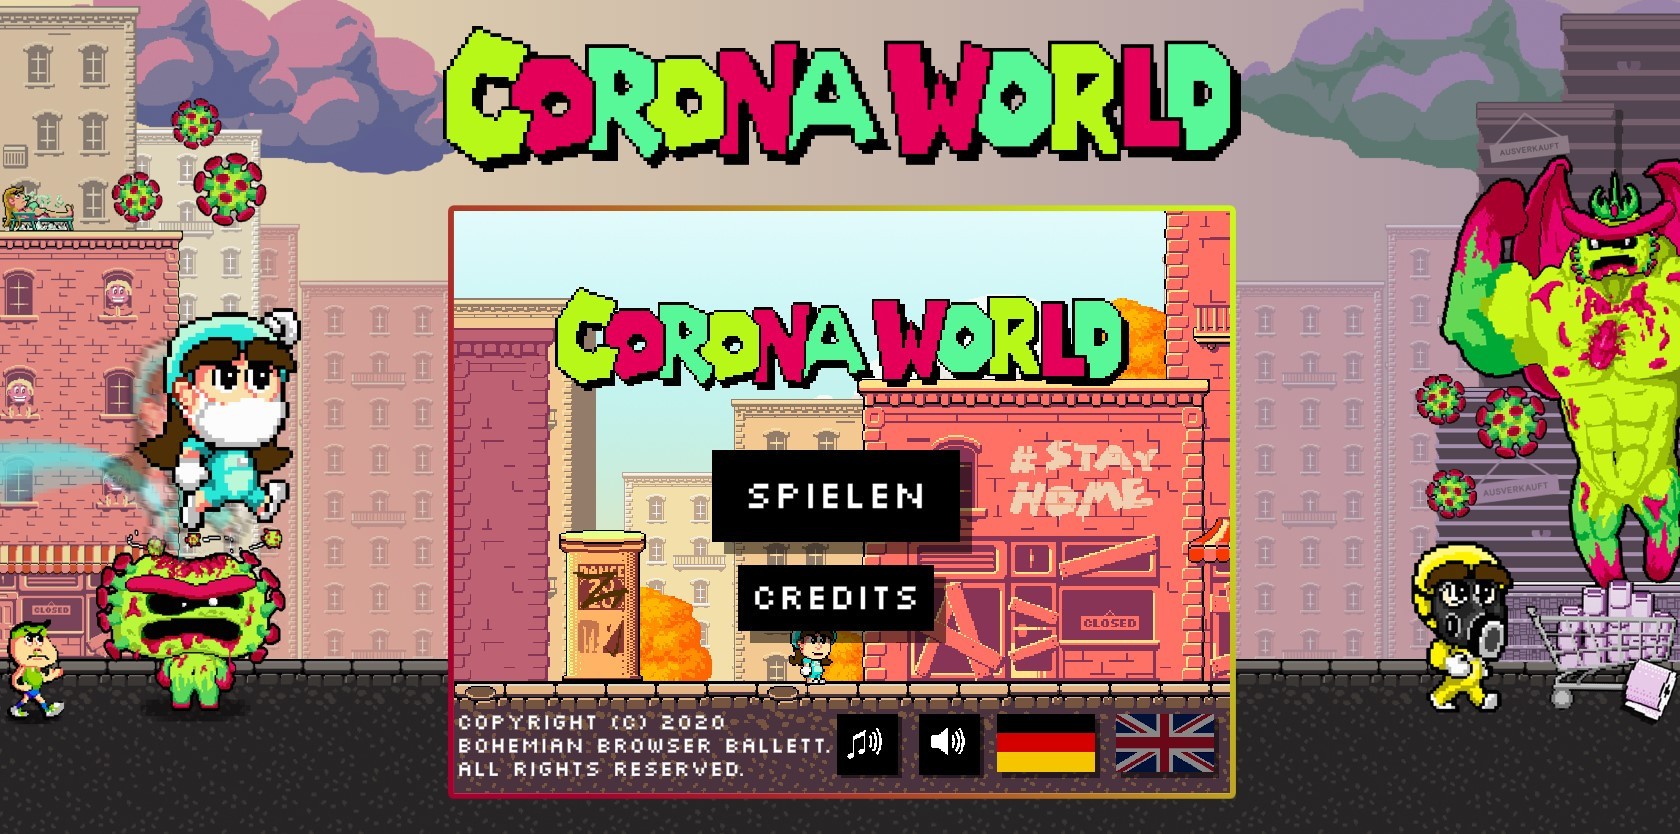 O polêmico jogo Corona World (Foto: reprodução)